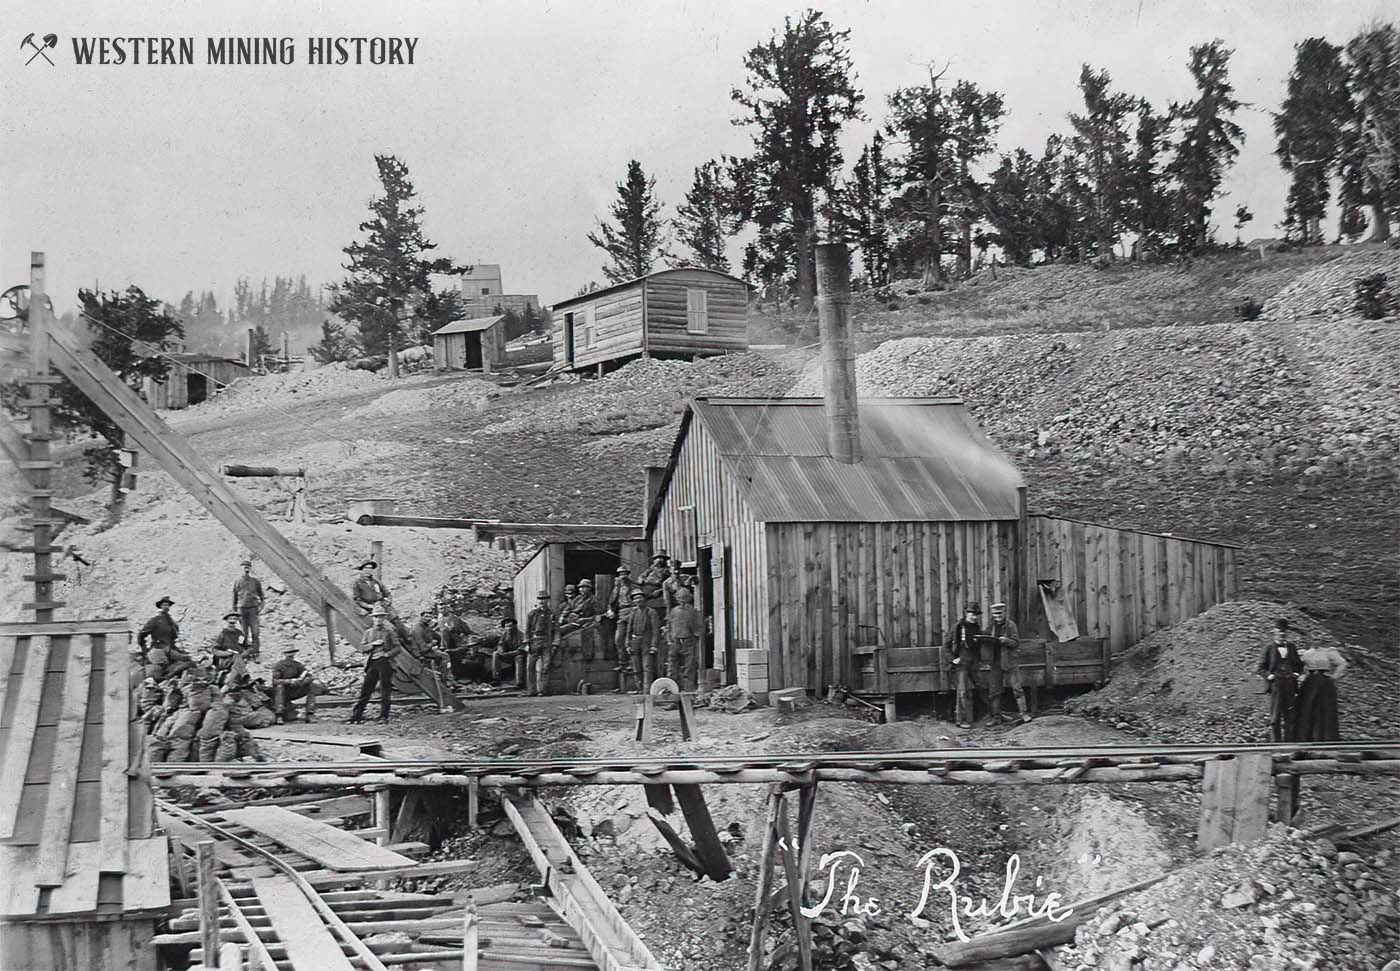 Rubie mine near Goldfield, Colorado ca. 1900